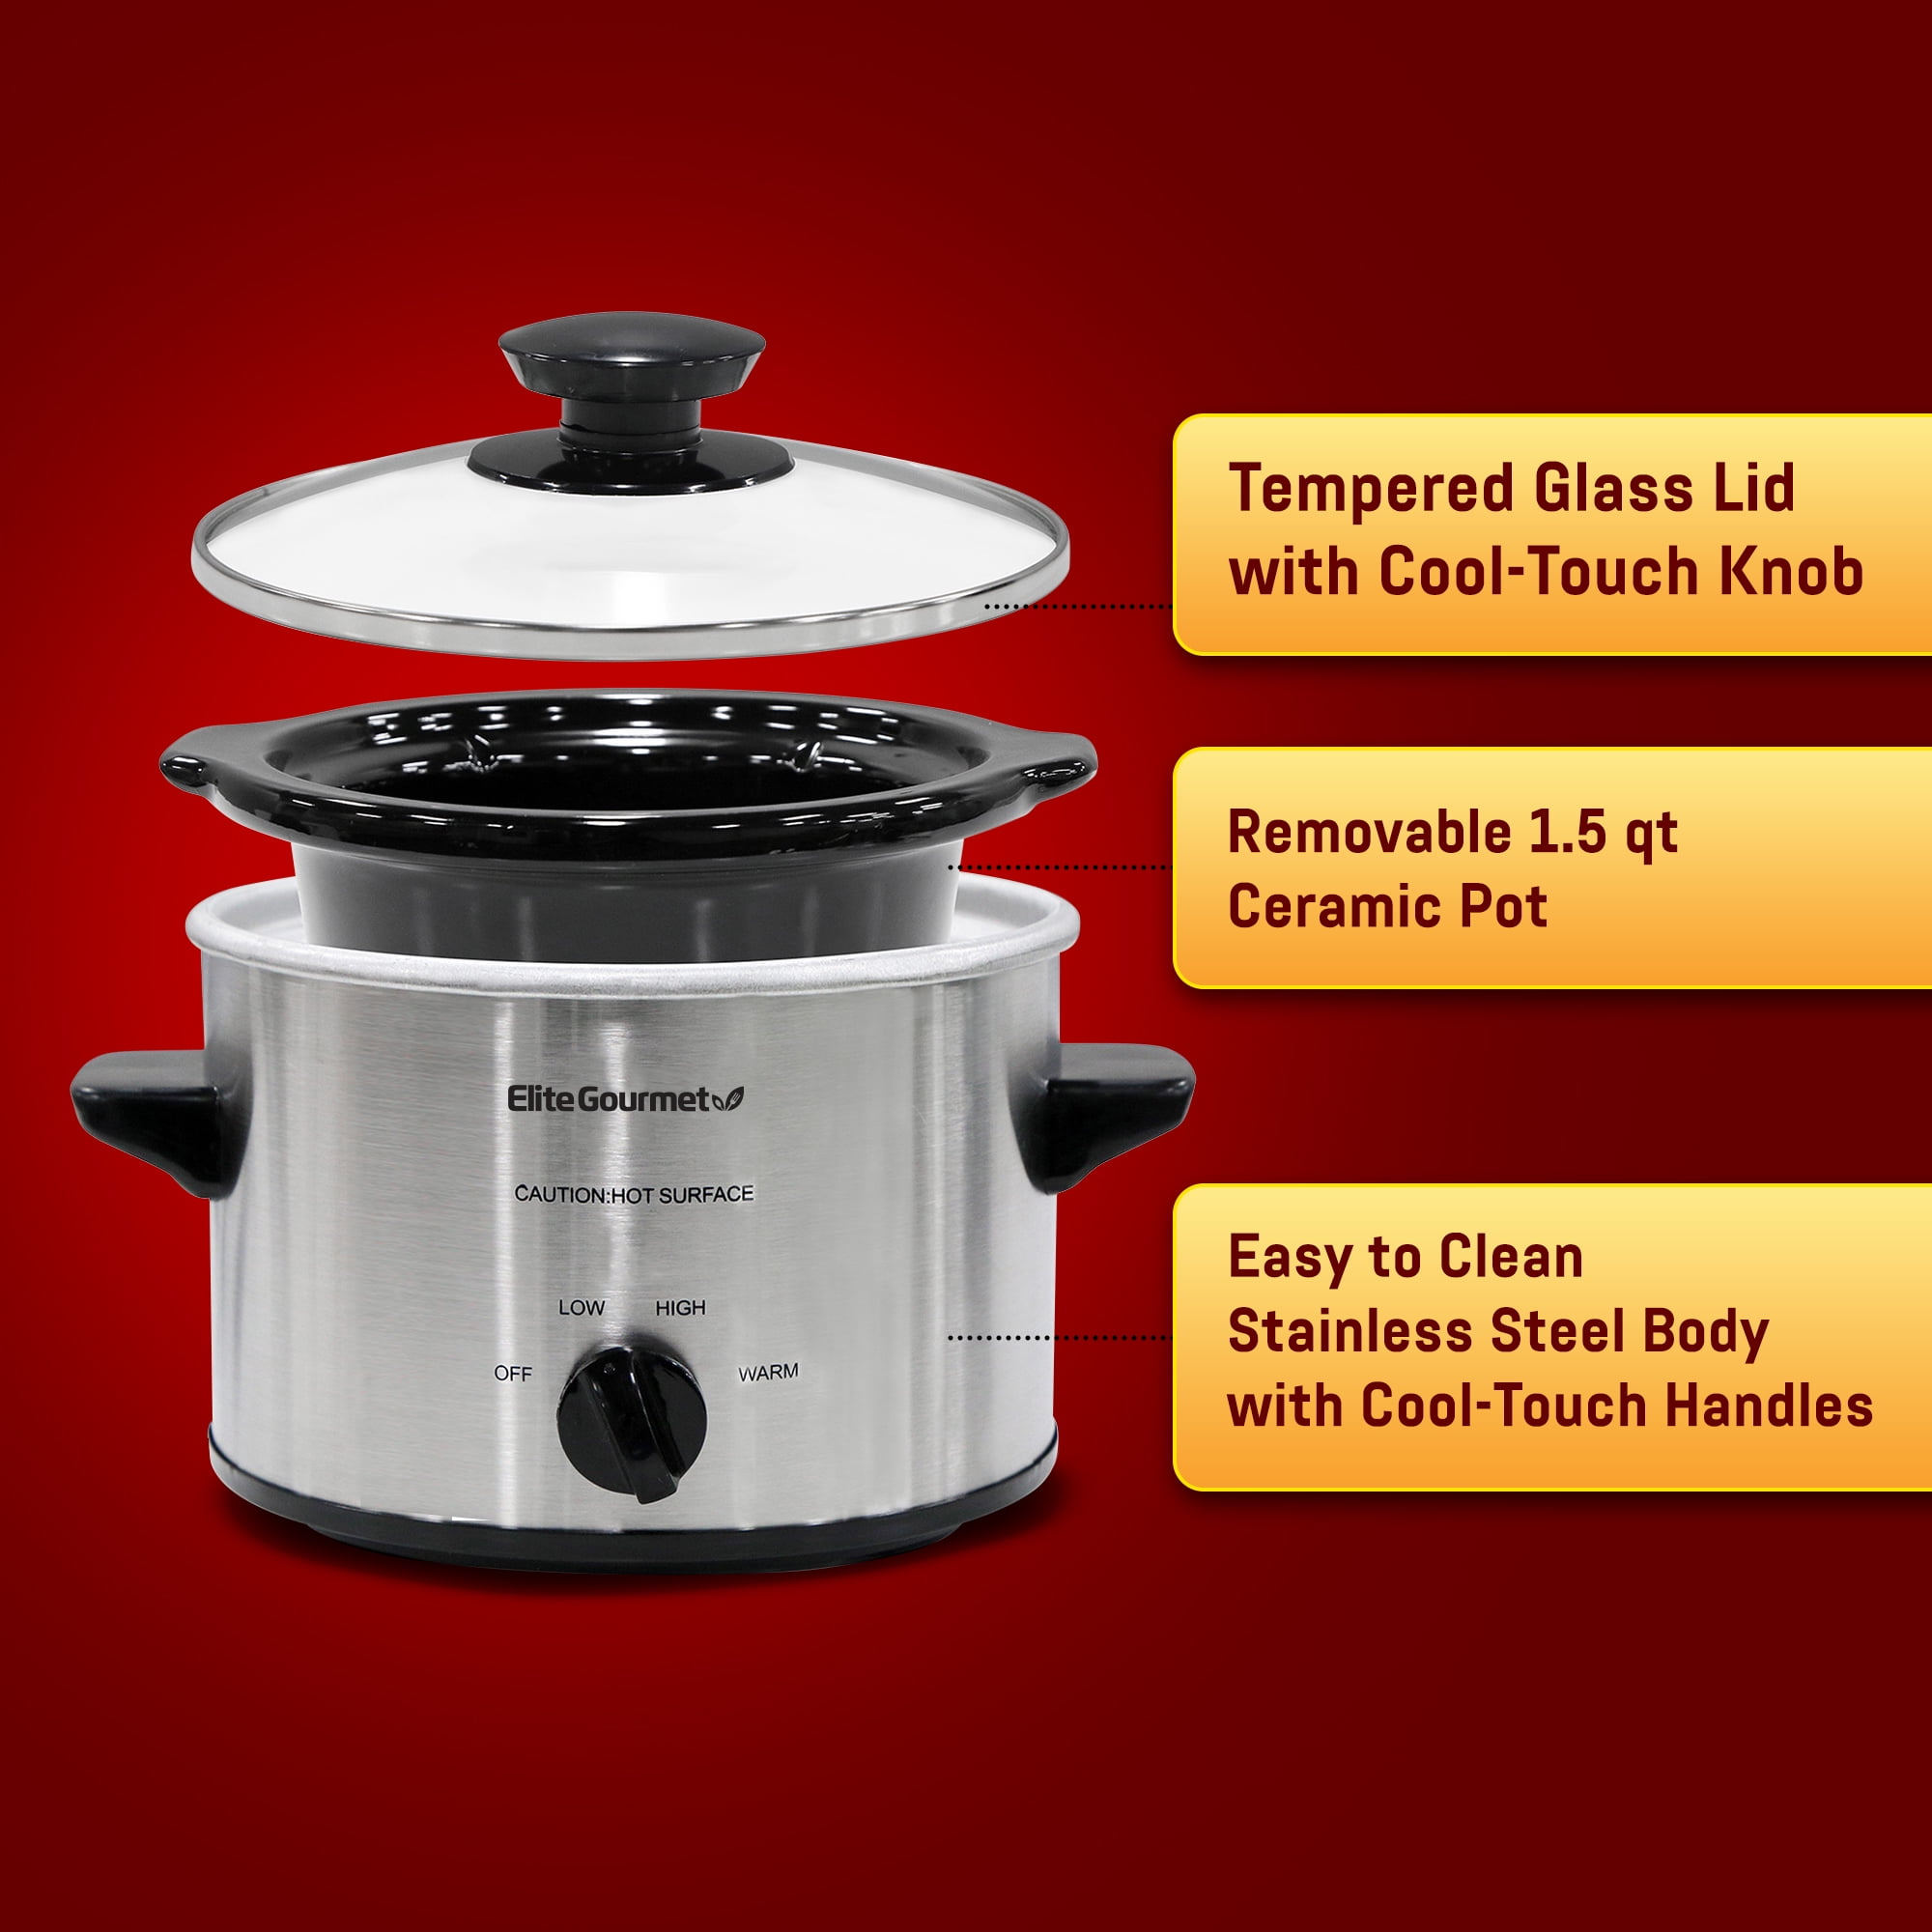 Elite Cuisine 1.5 qt. Mini Slow Cooker in Stainless Steel - 9455764